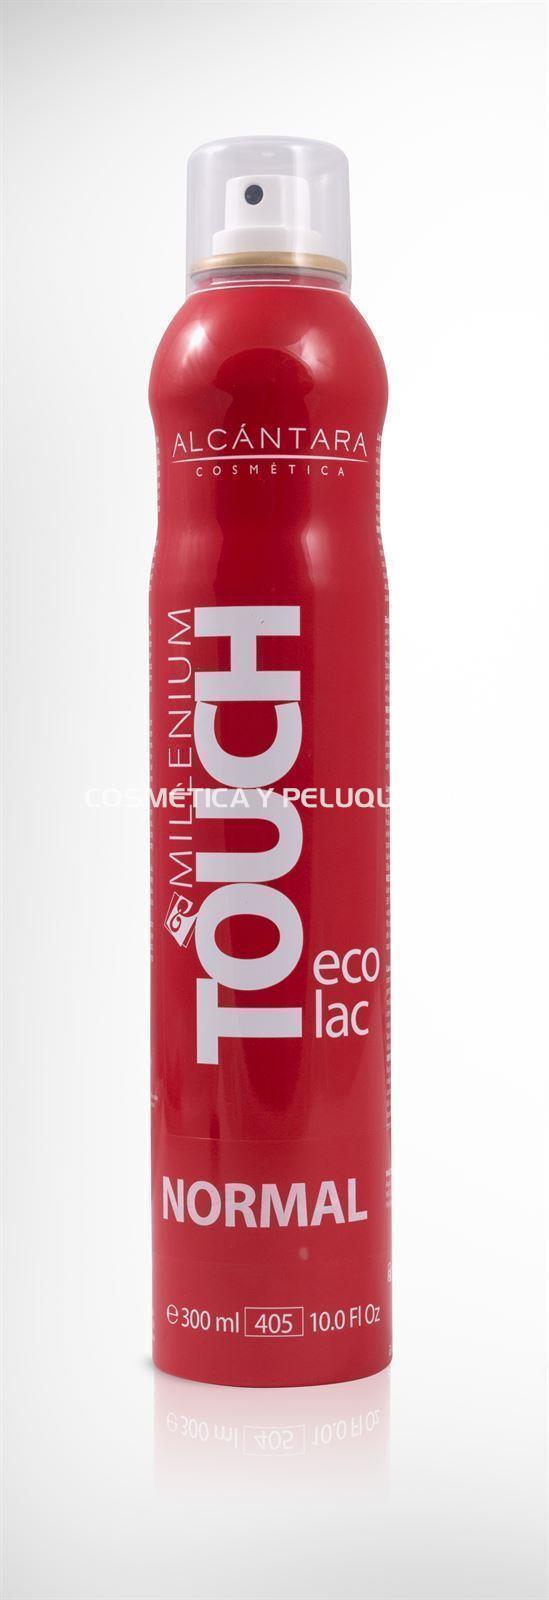 Eco-Lac Milenium Touch normal, laca ecológica sin gas 300ml. - Imagen 1